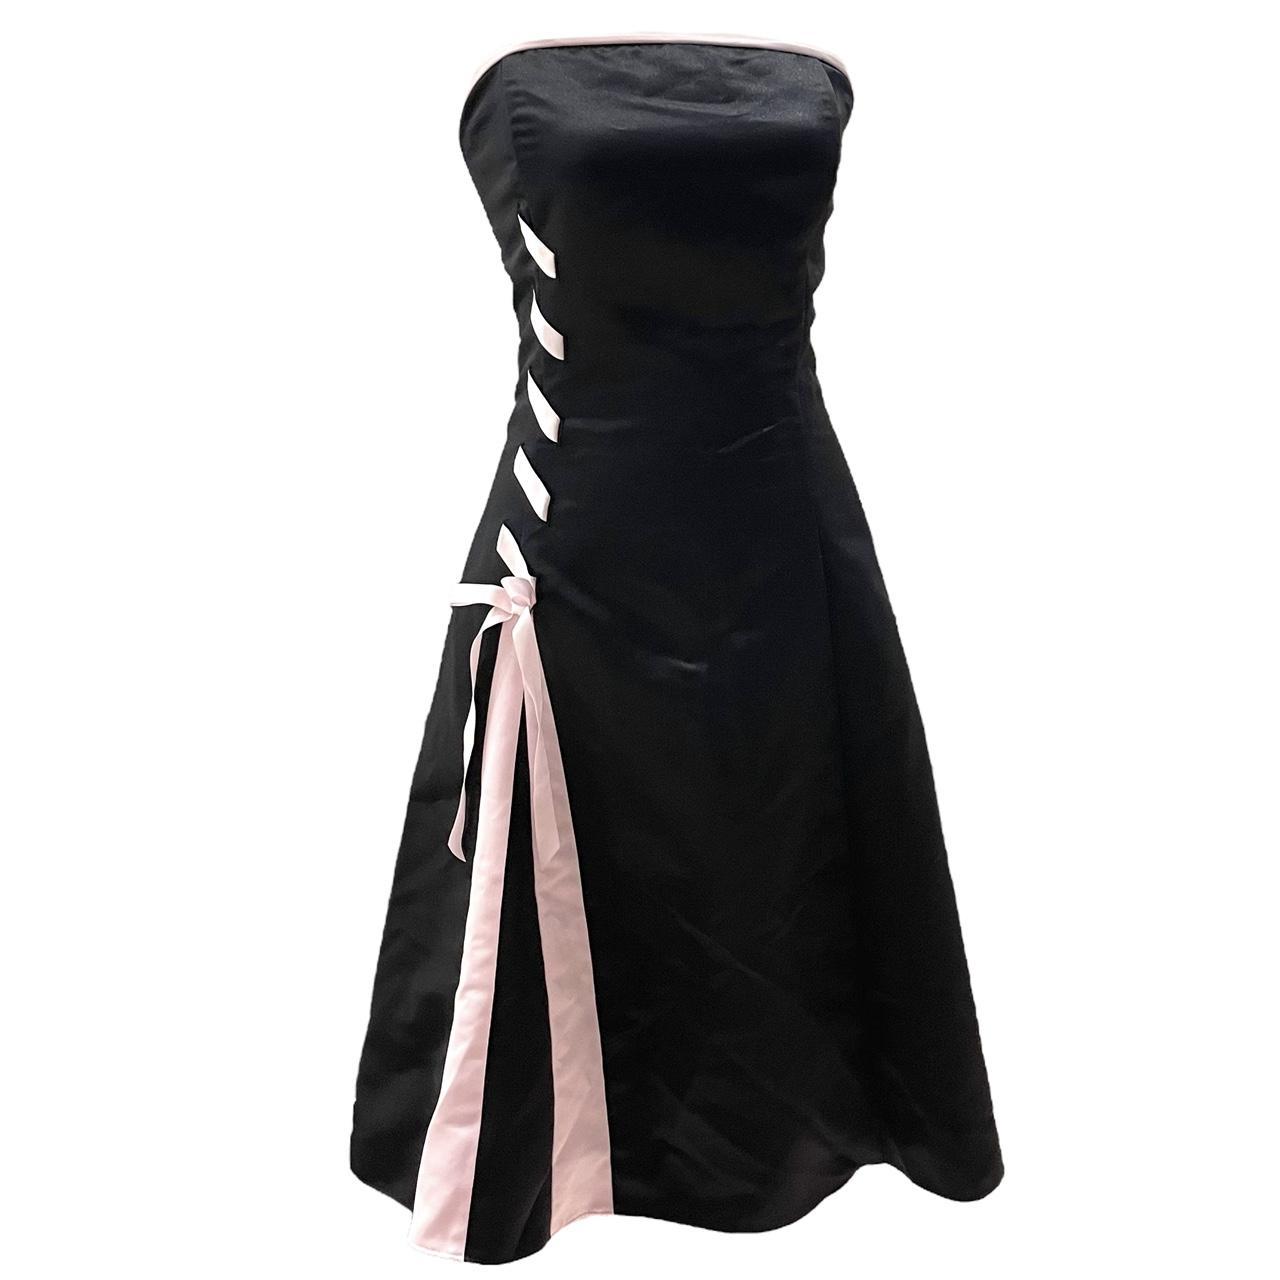 Gunne Sax Women's Black and Pink Dress